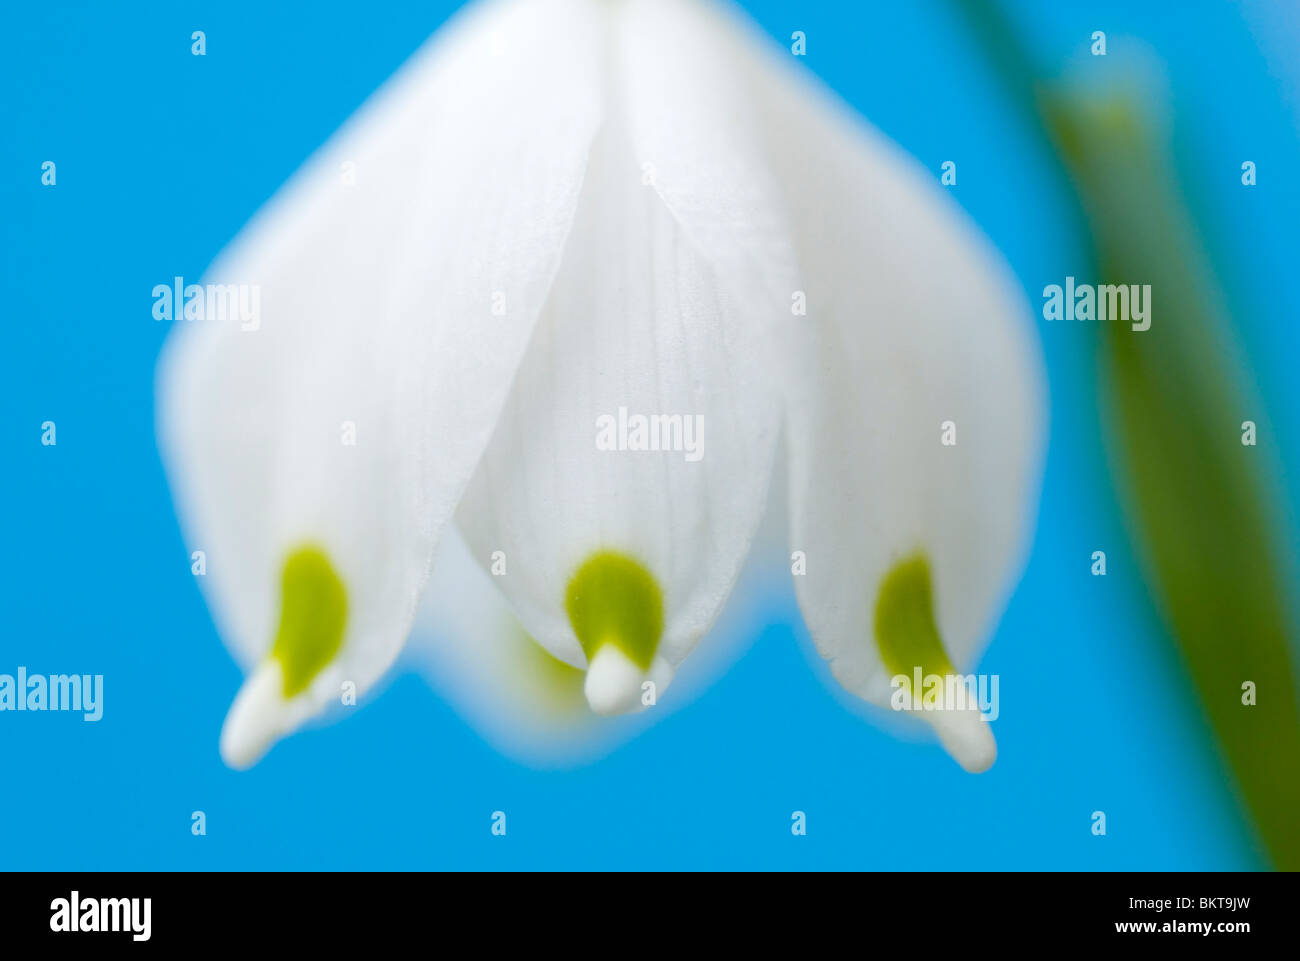 Macro nomeop van een lenteklokje tegen blauwe achtergrond; Macro Immagine di un fiocco di neve di primavera contro uno sfondo blu Foto Stock